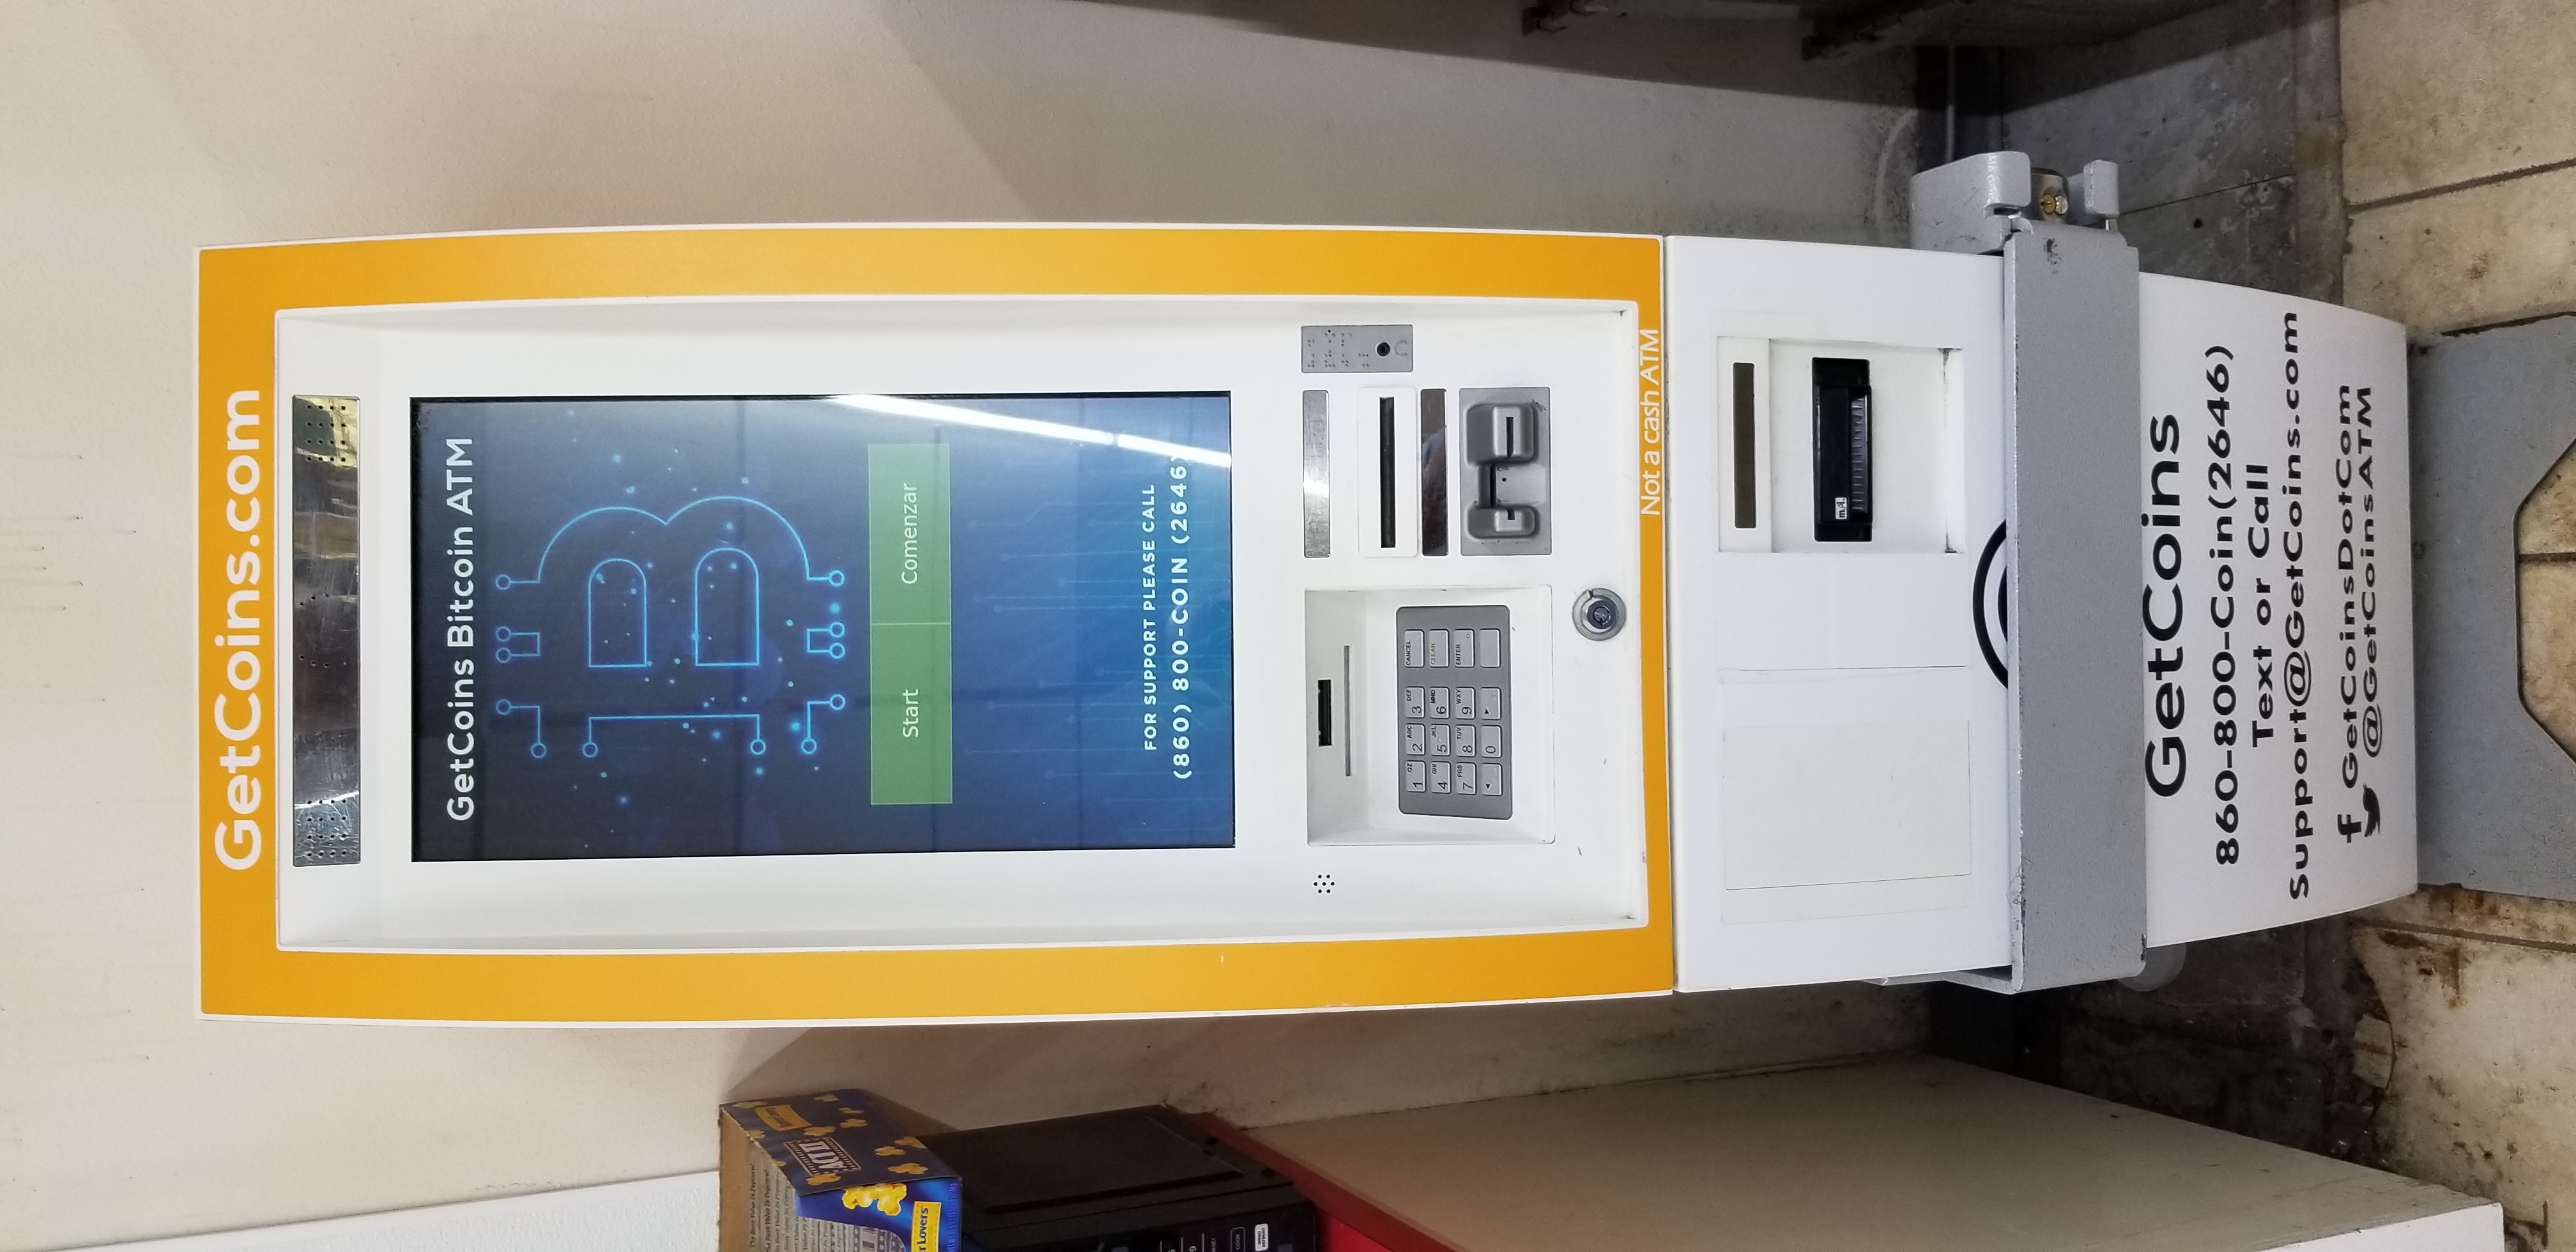 Getcoins - Bitcoin ATM - Inside of Ritestop 7 in Houston, Texas